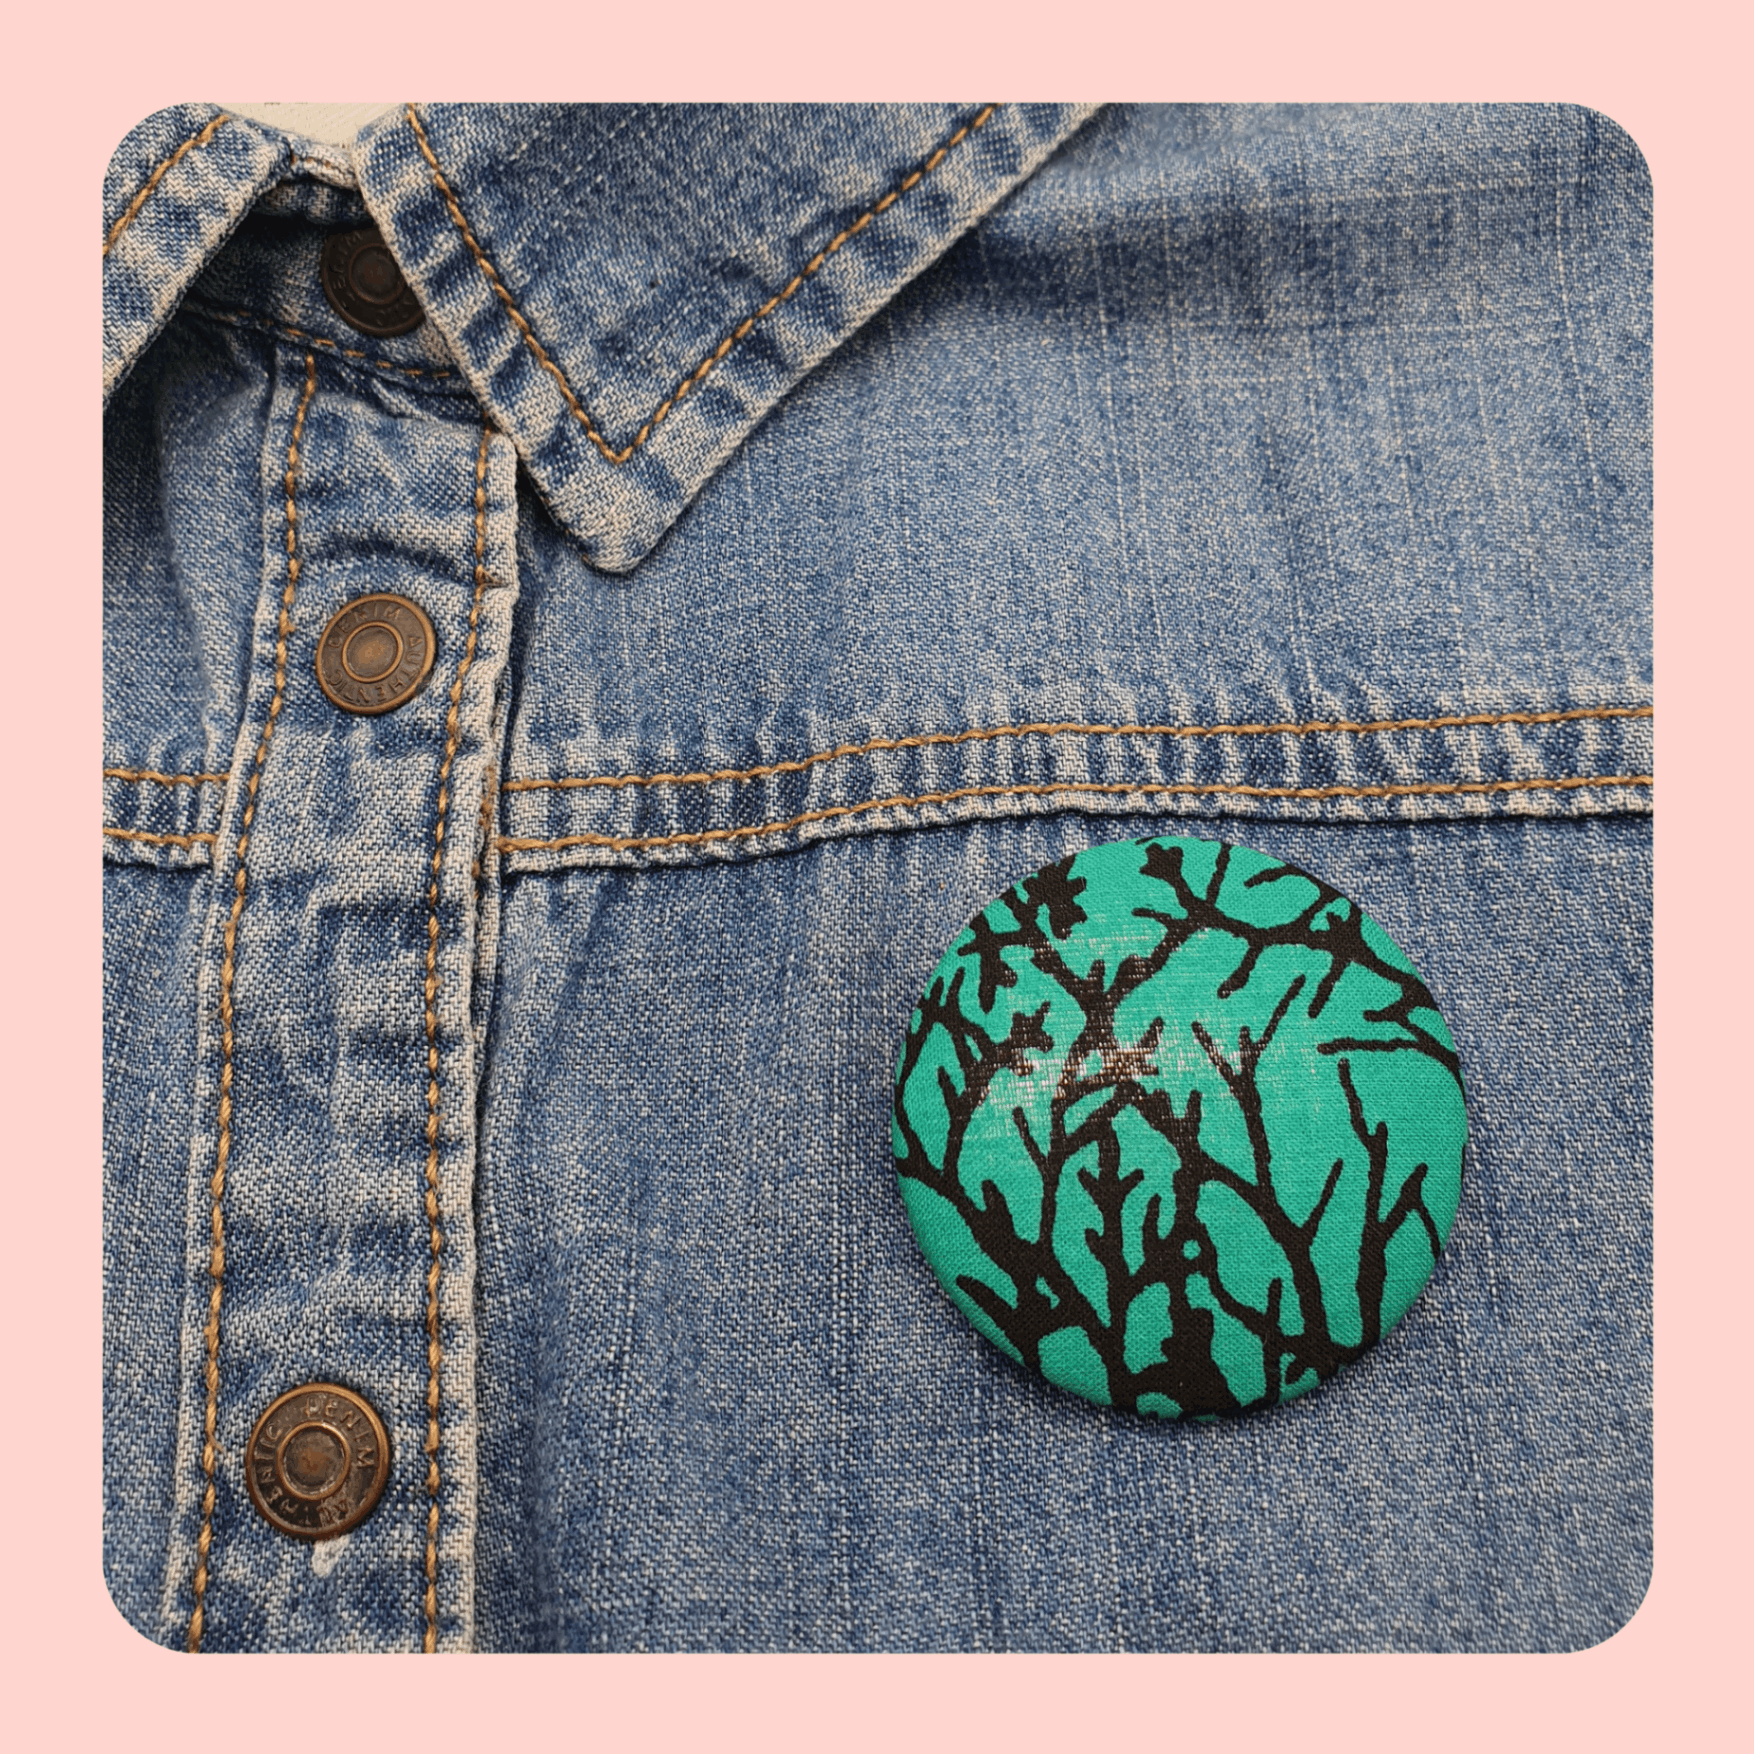 Green tree branch fabric pin brooch